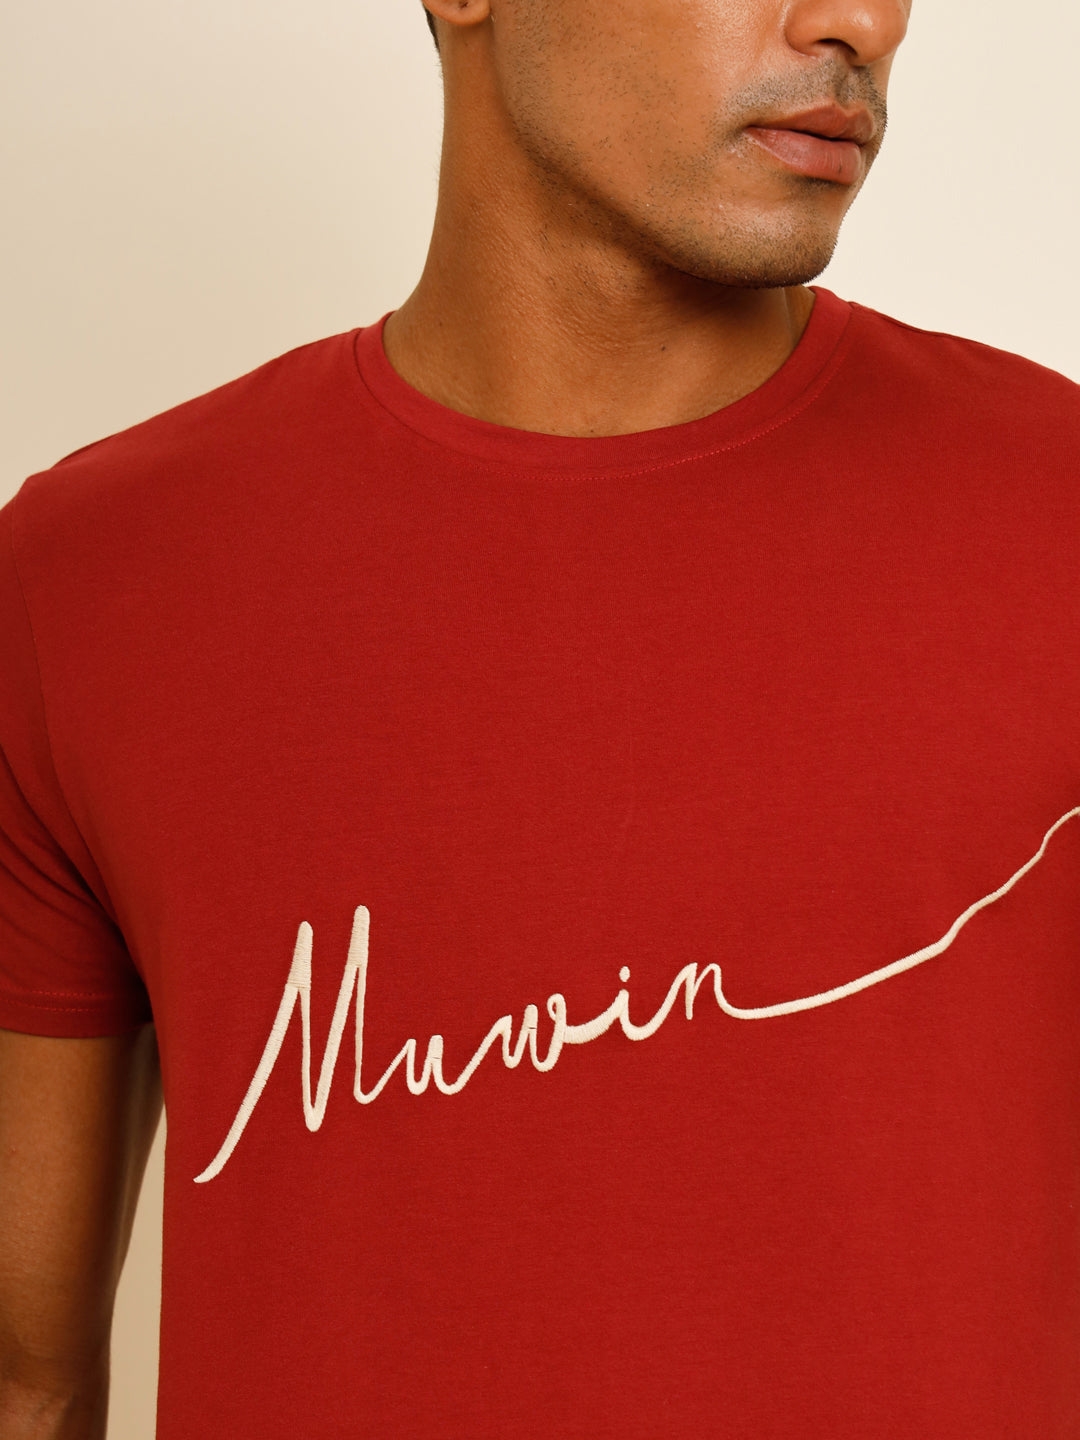 Muwin Burgundy Embroidered T-shirt